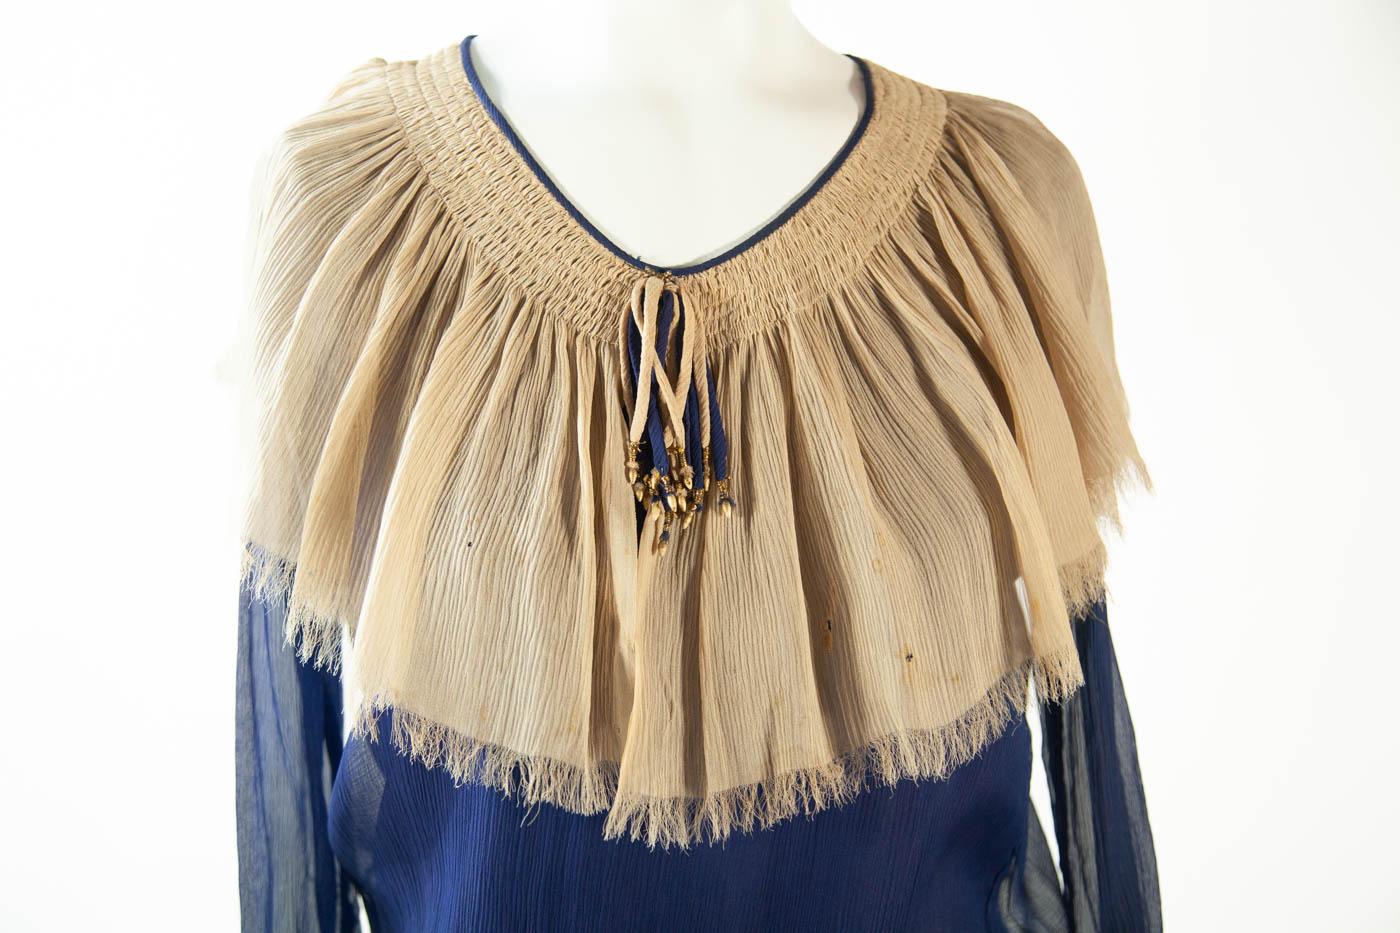 Very Vintage Original 1920s Silk Chiffon Blue Dress For Sale 5